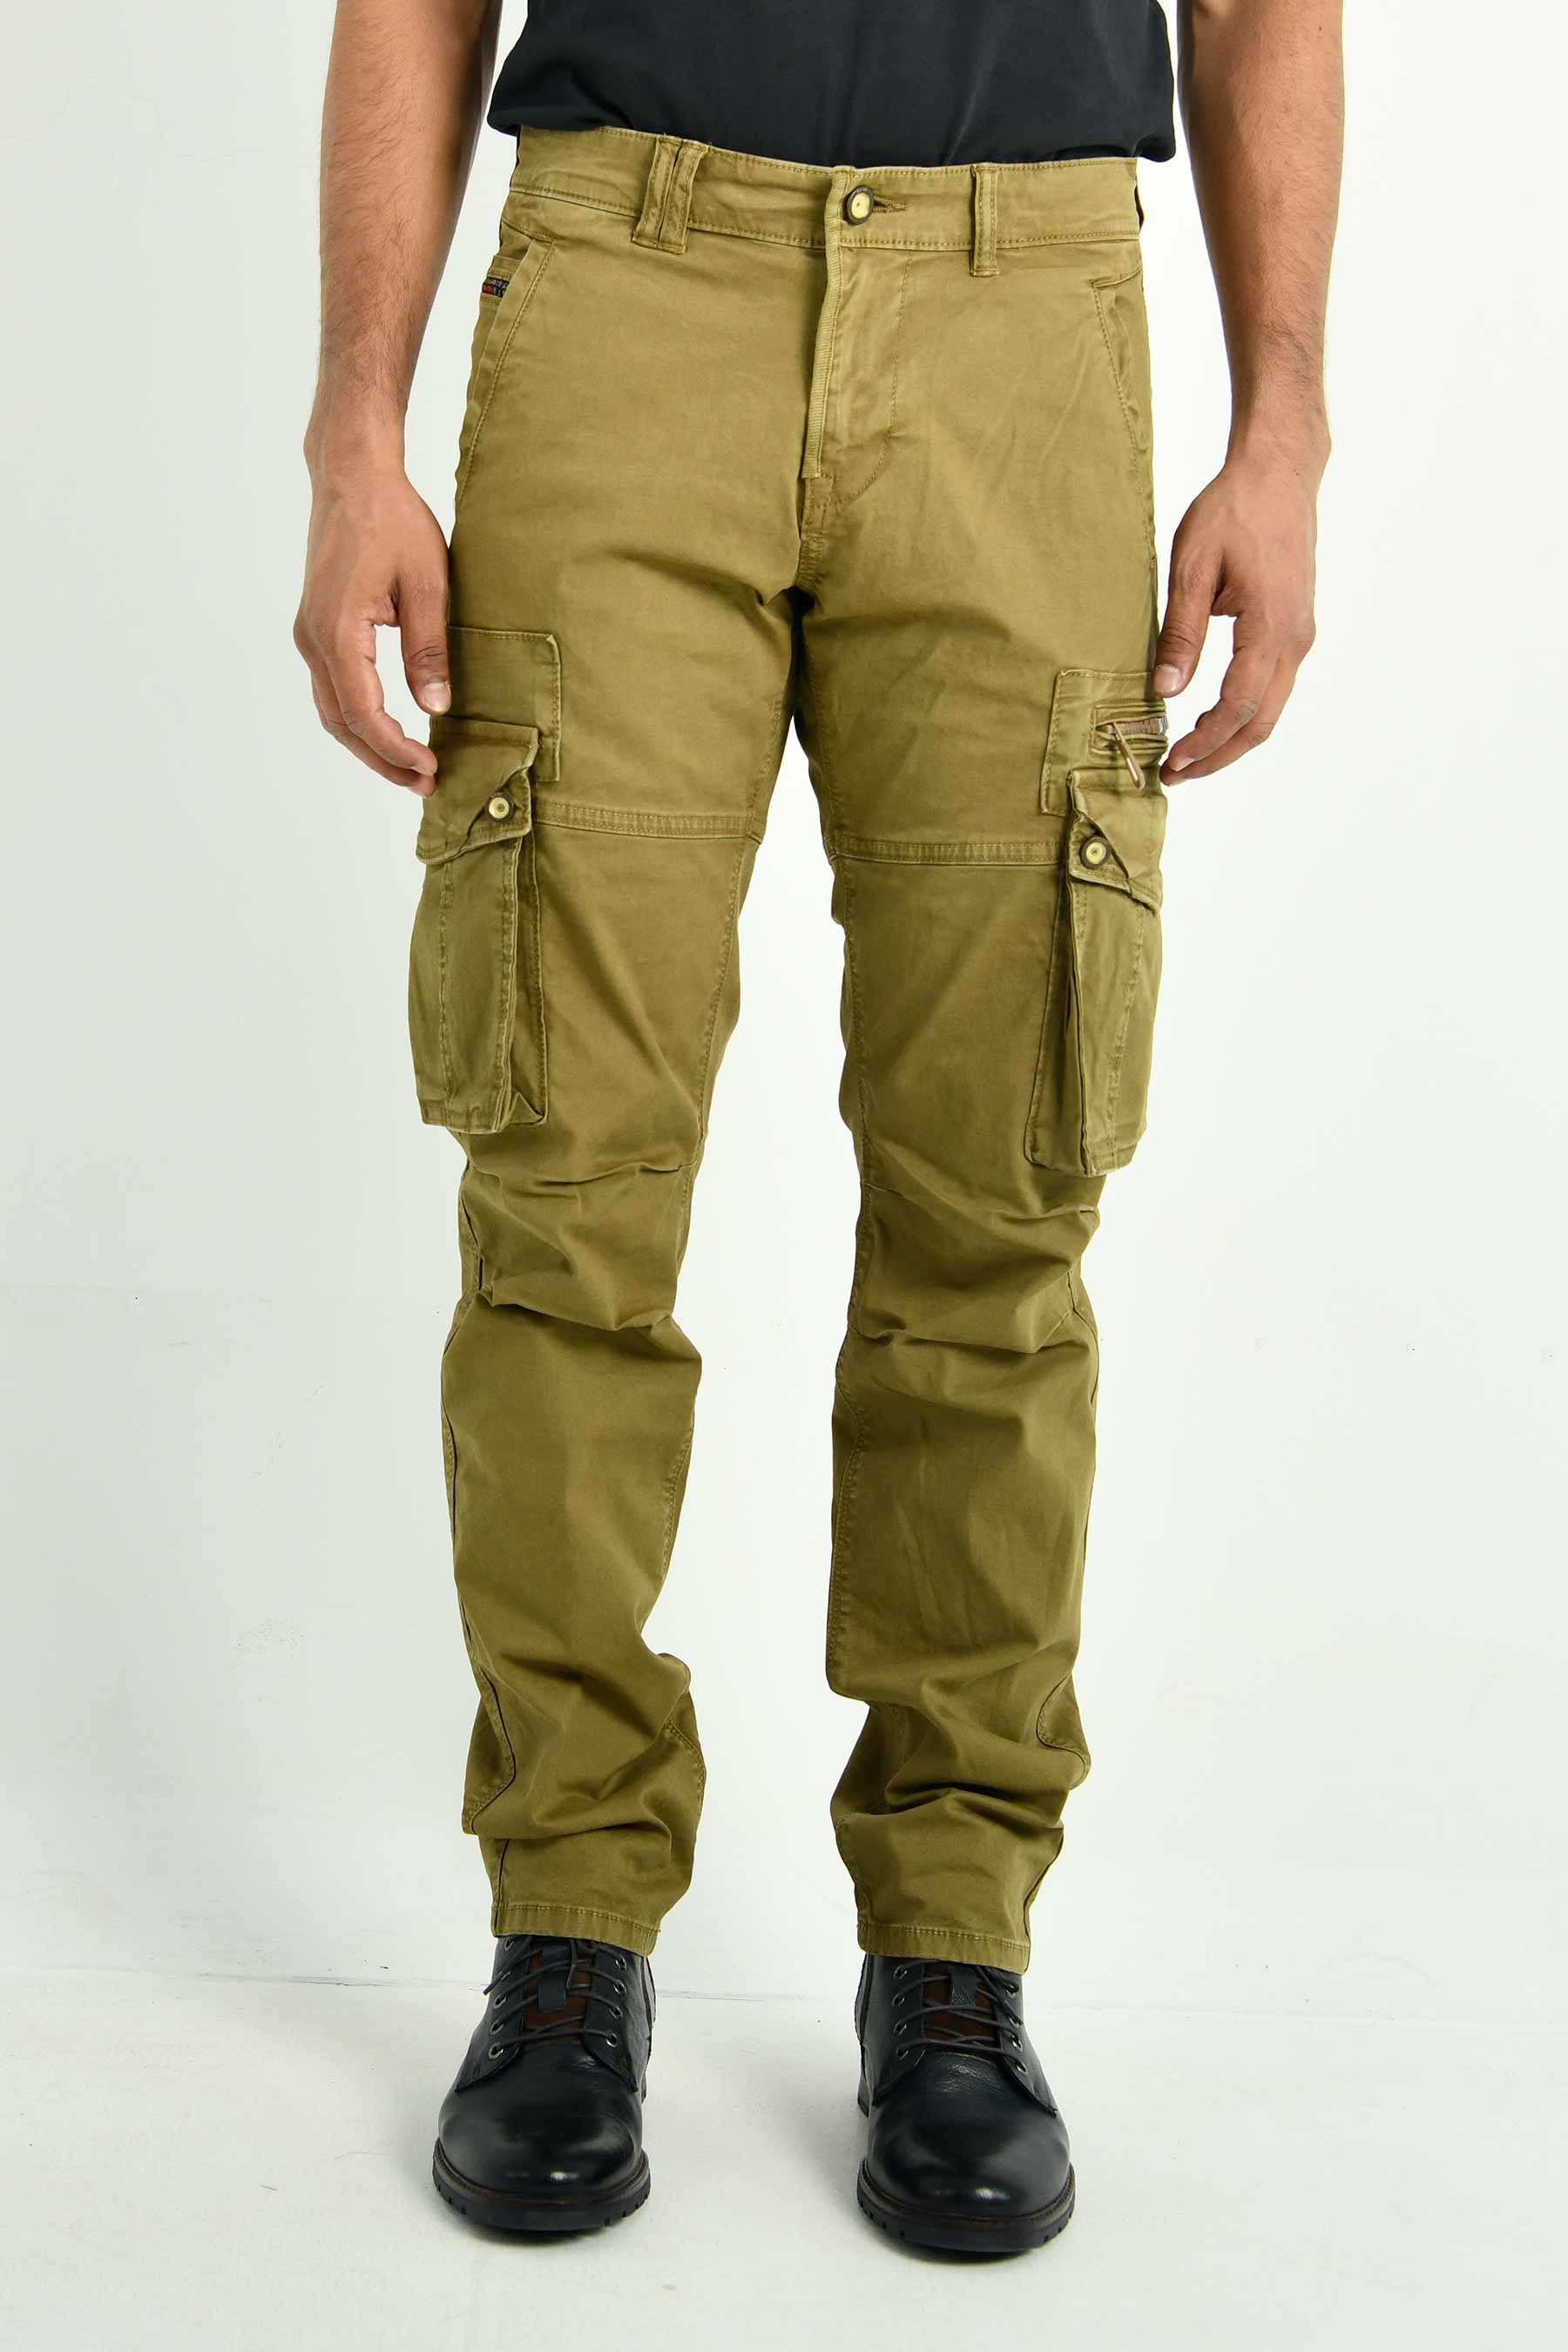 Men’s Cargo Pants -RJCP101 (KHAKI)